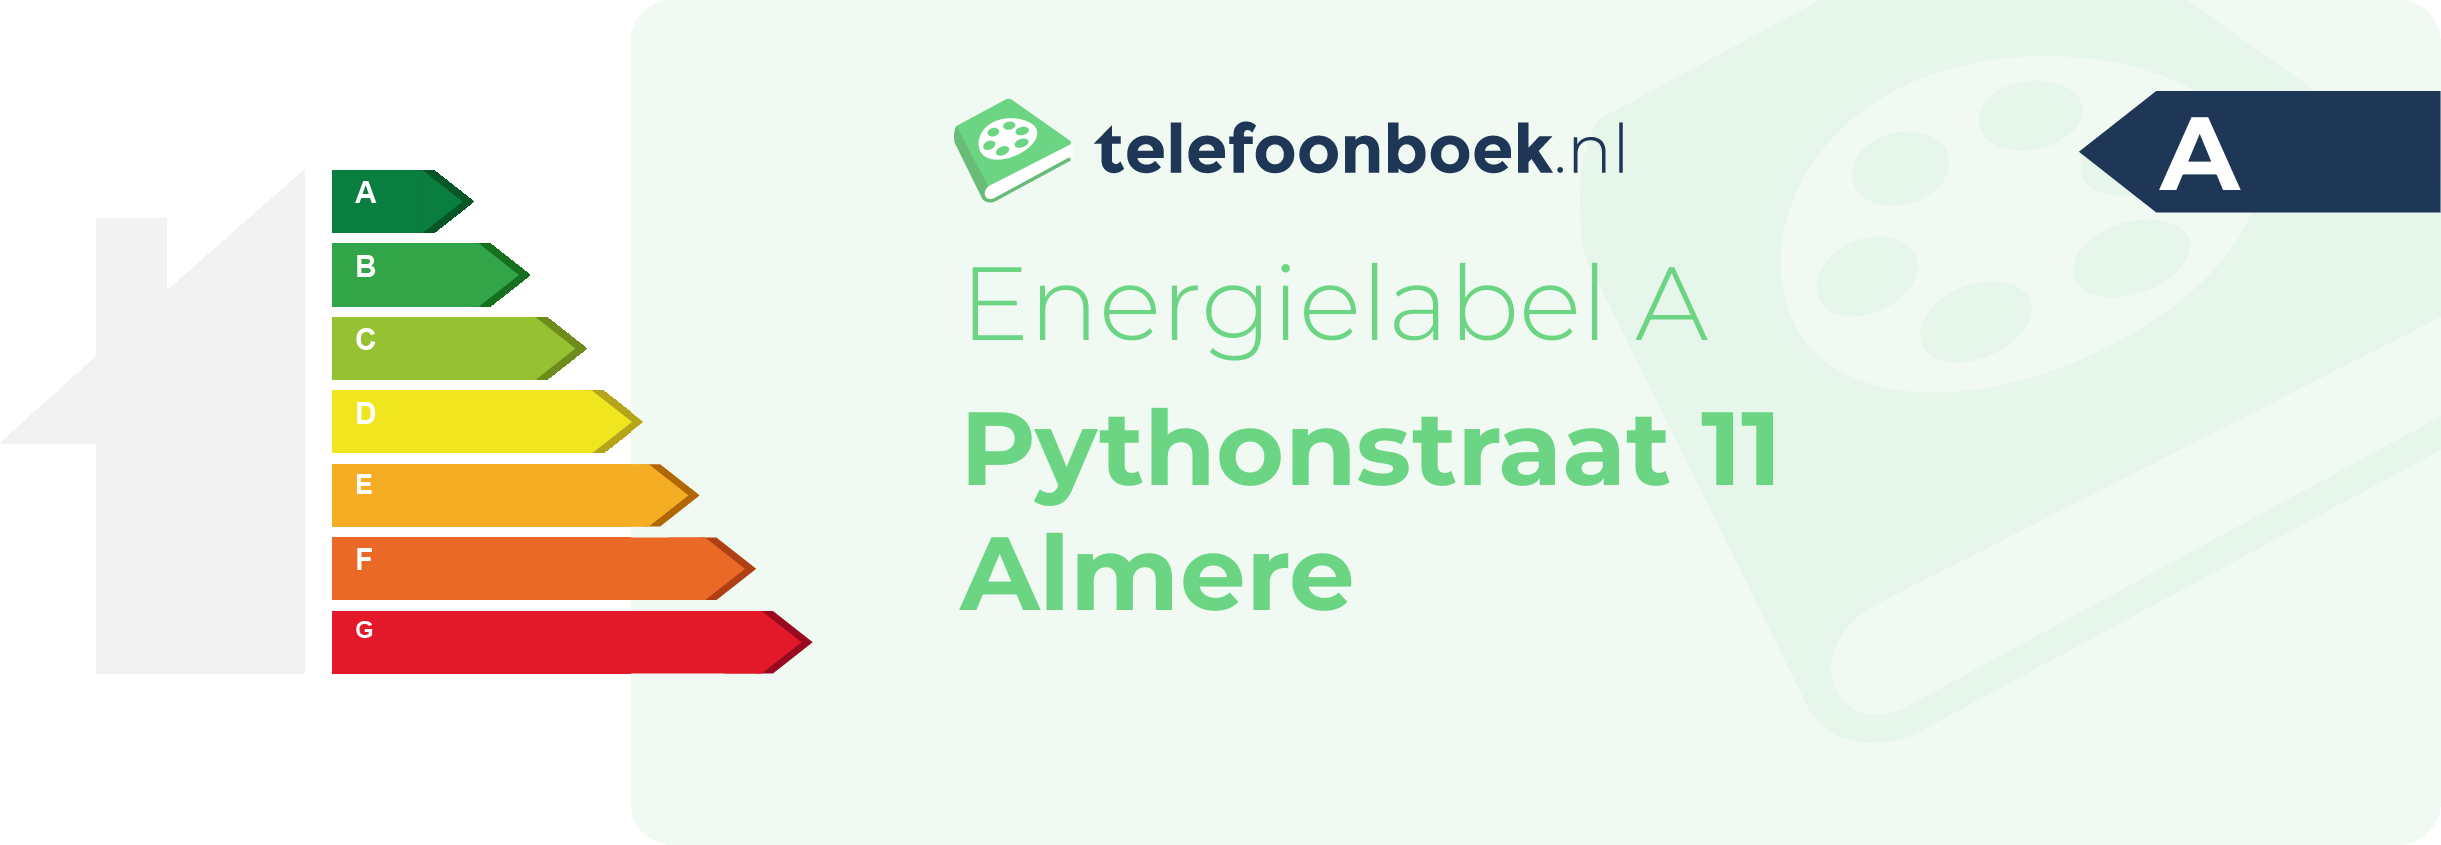 Energielabel Pythonstraat 11 Almere